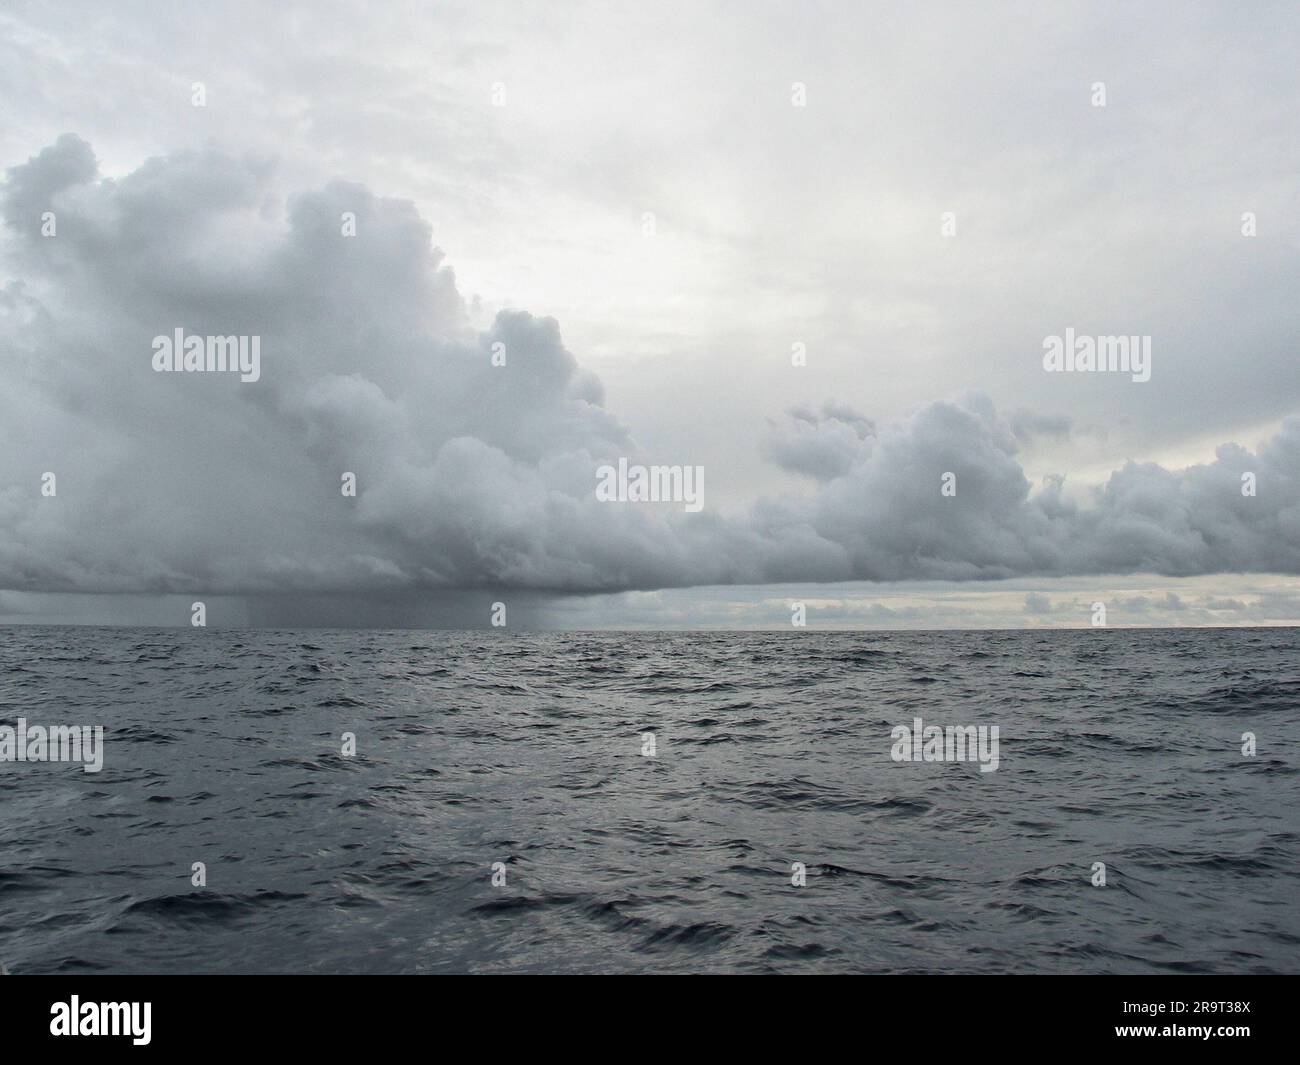 Heavy rain clouds over the ocean, doldrums / ITCZ, Atlantic ocean. Stock Photo